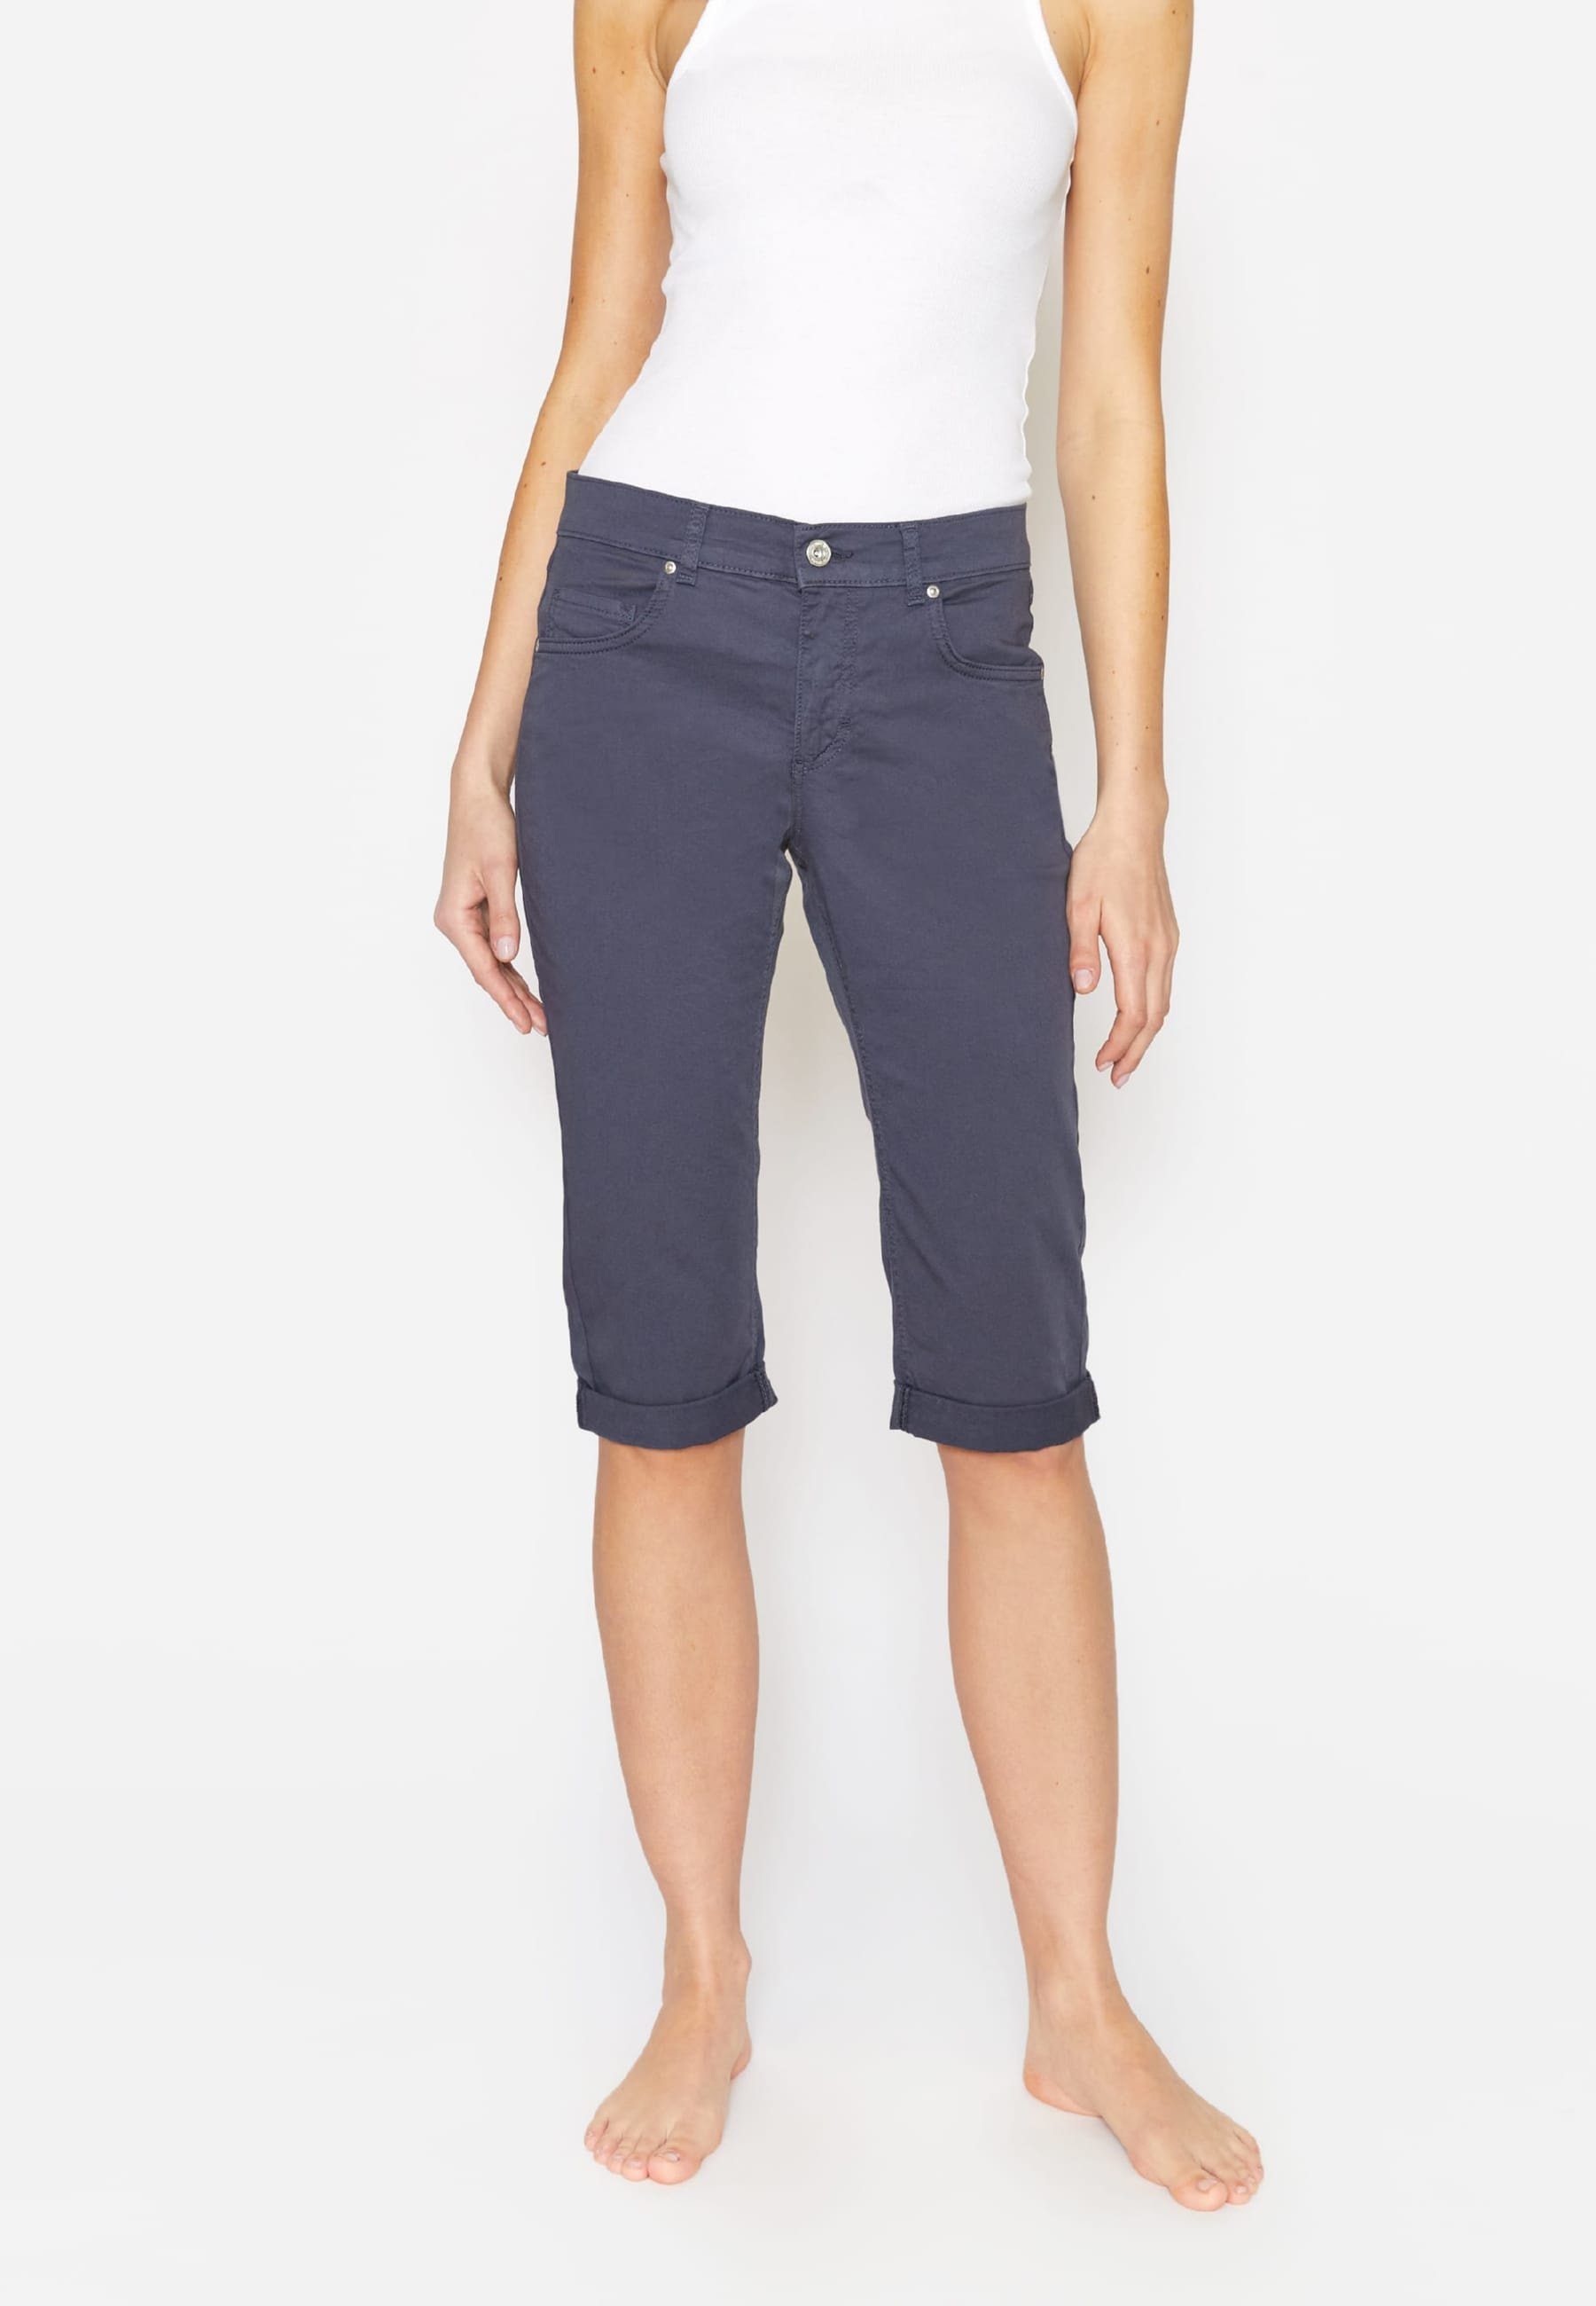 mit TU 5-Pocket-Hose Capri Label-Applikationen ANGELS dunkelblau Slim-fit-Jeans